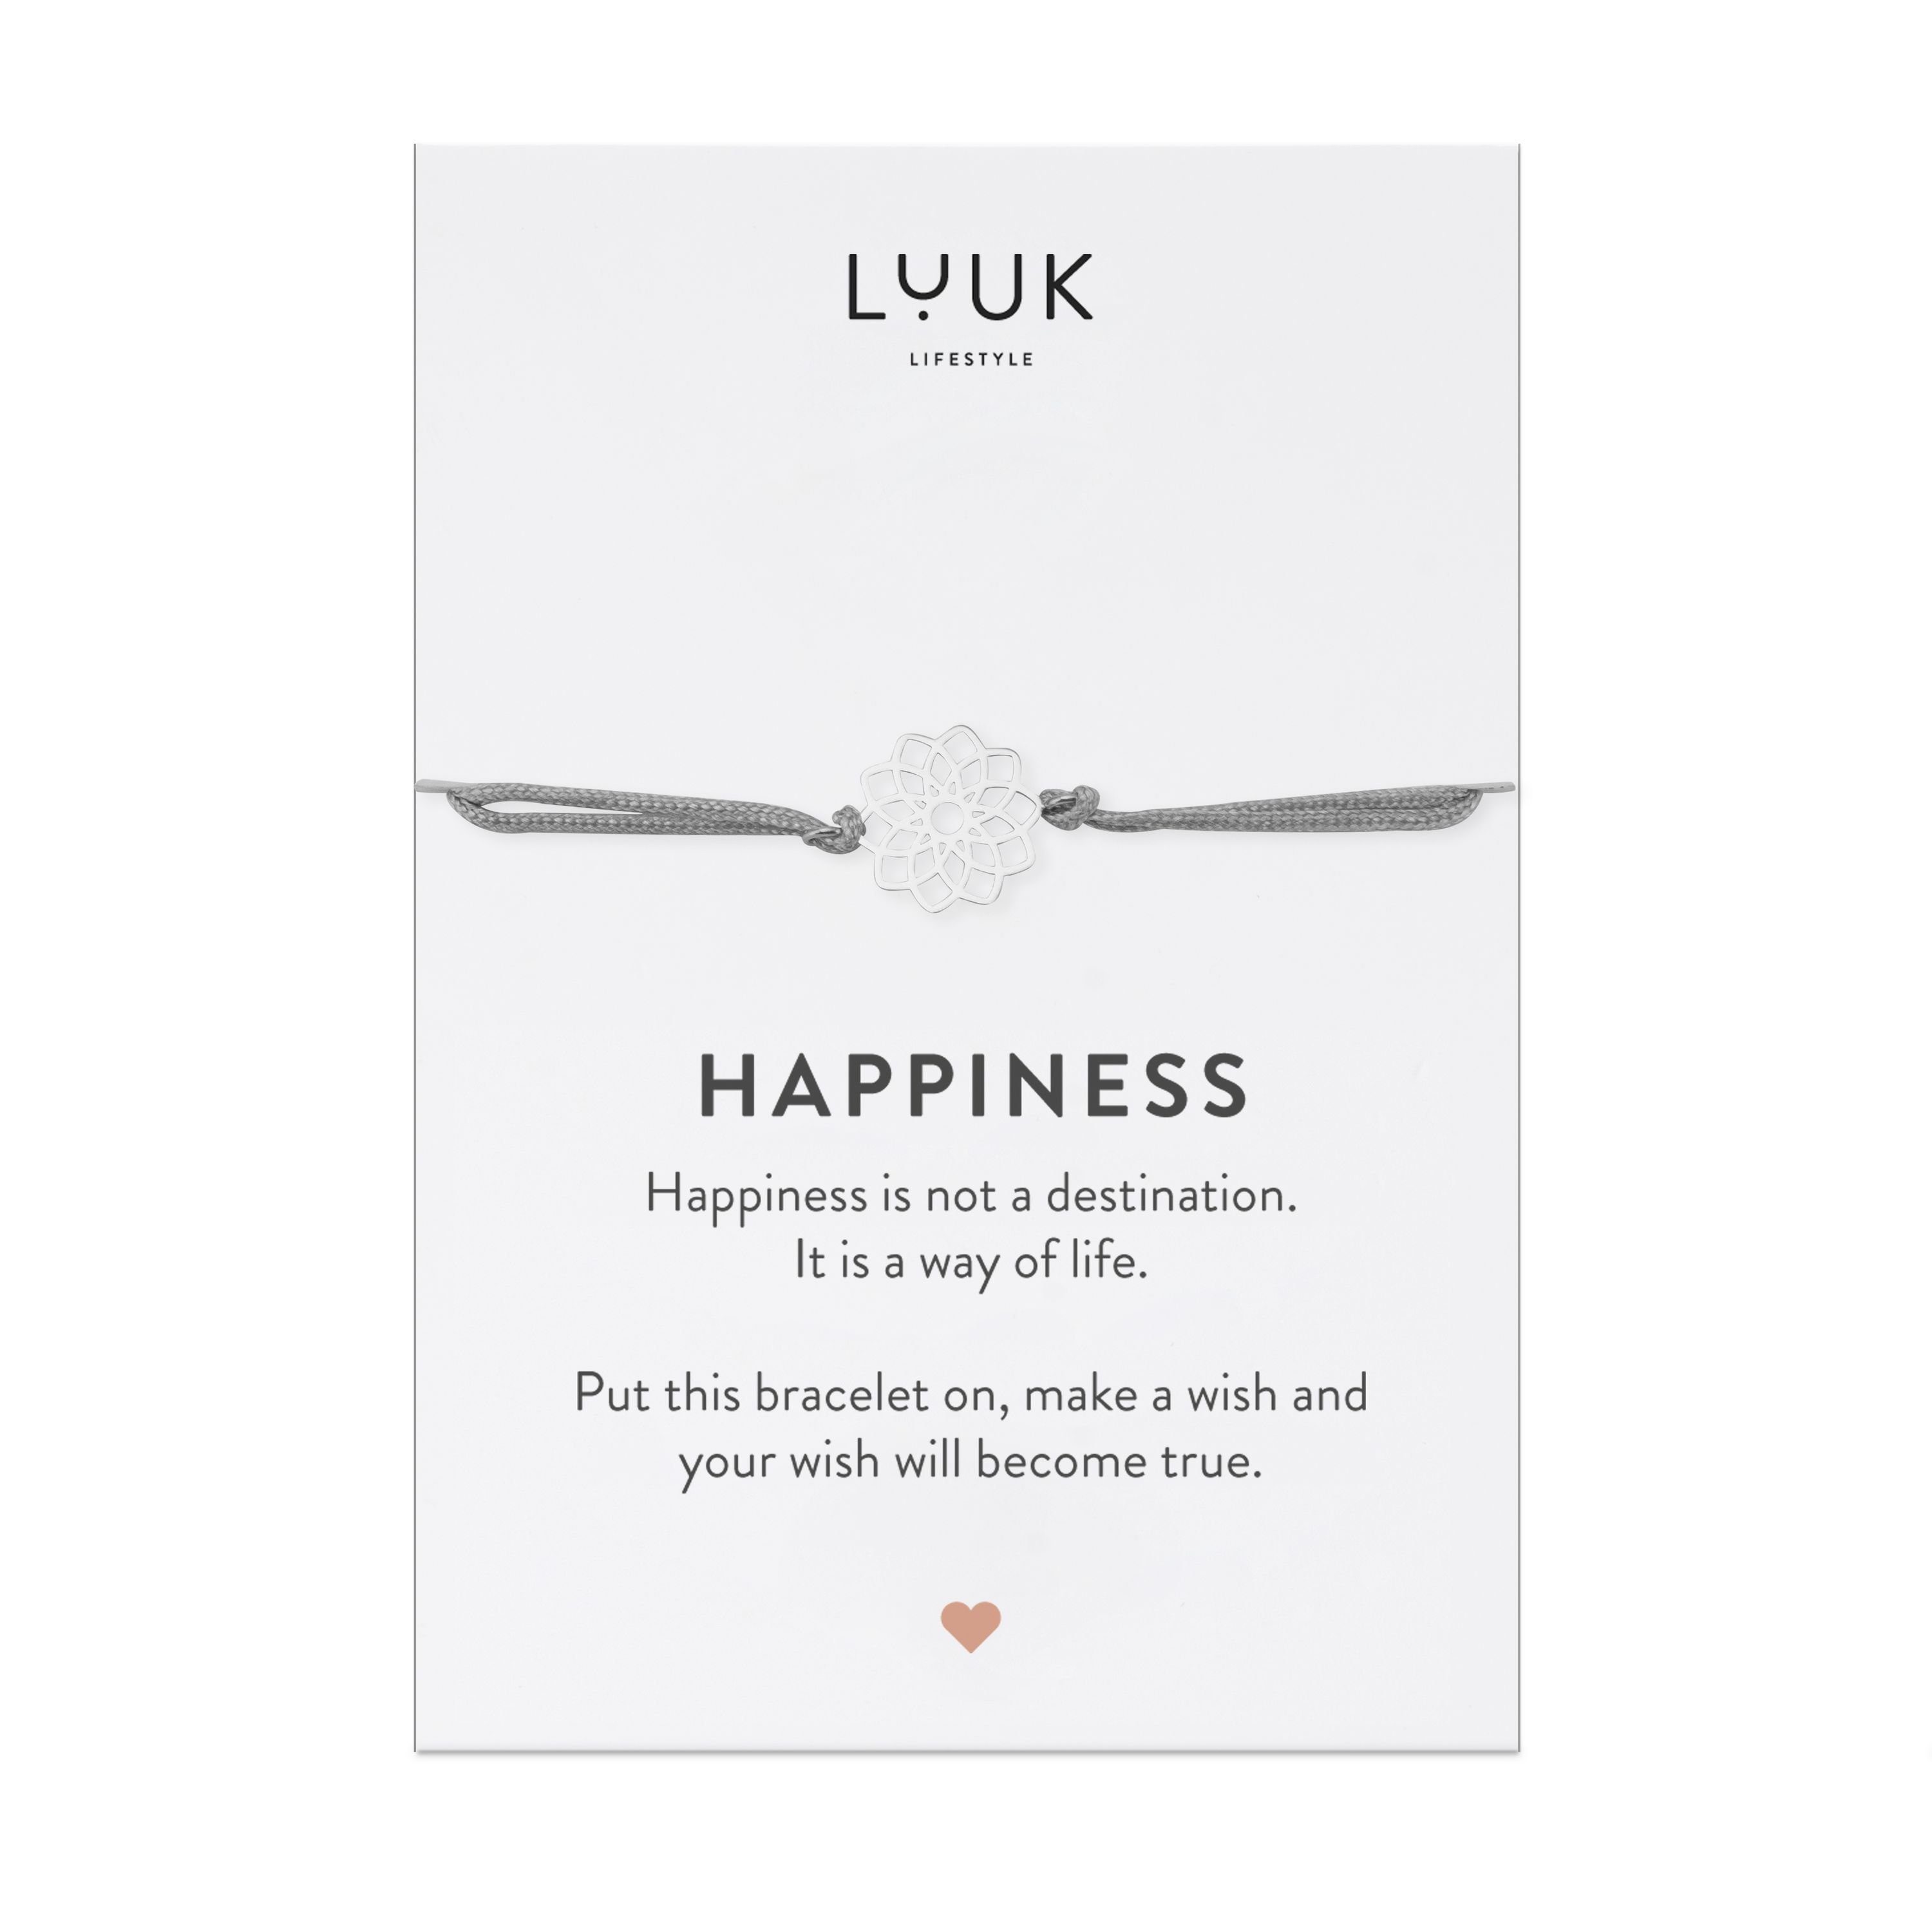 Happiness mit Freundschaftsarmband Mandala, LUUK Silber LIFESTYLE handmade, Spruchkarte